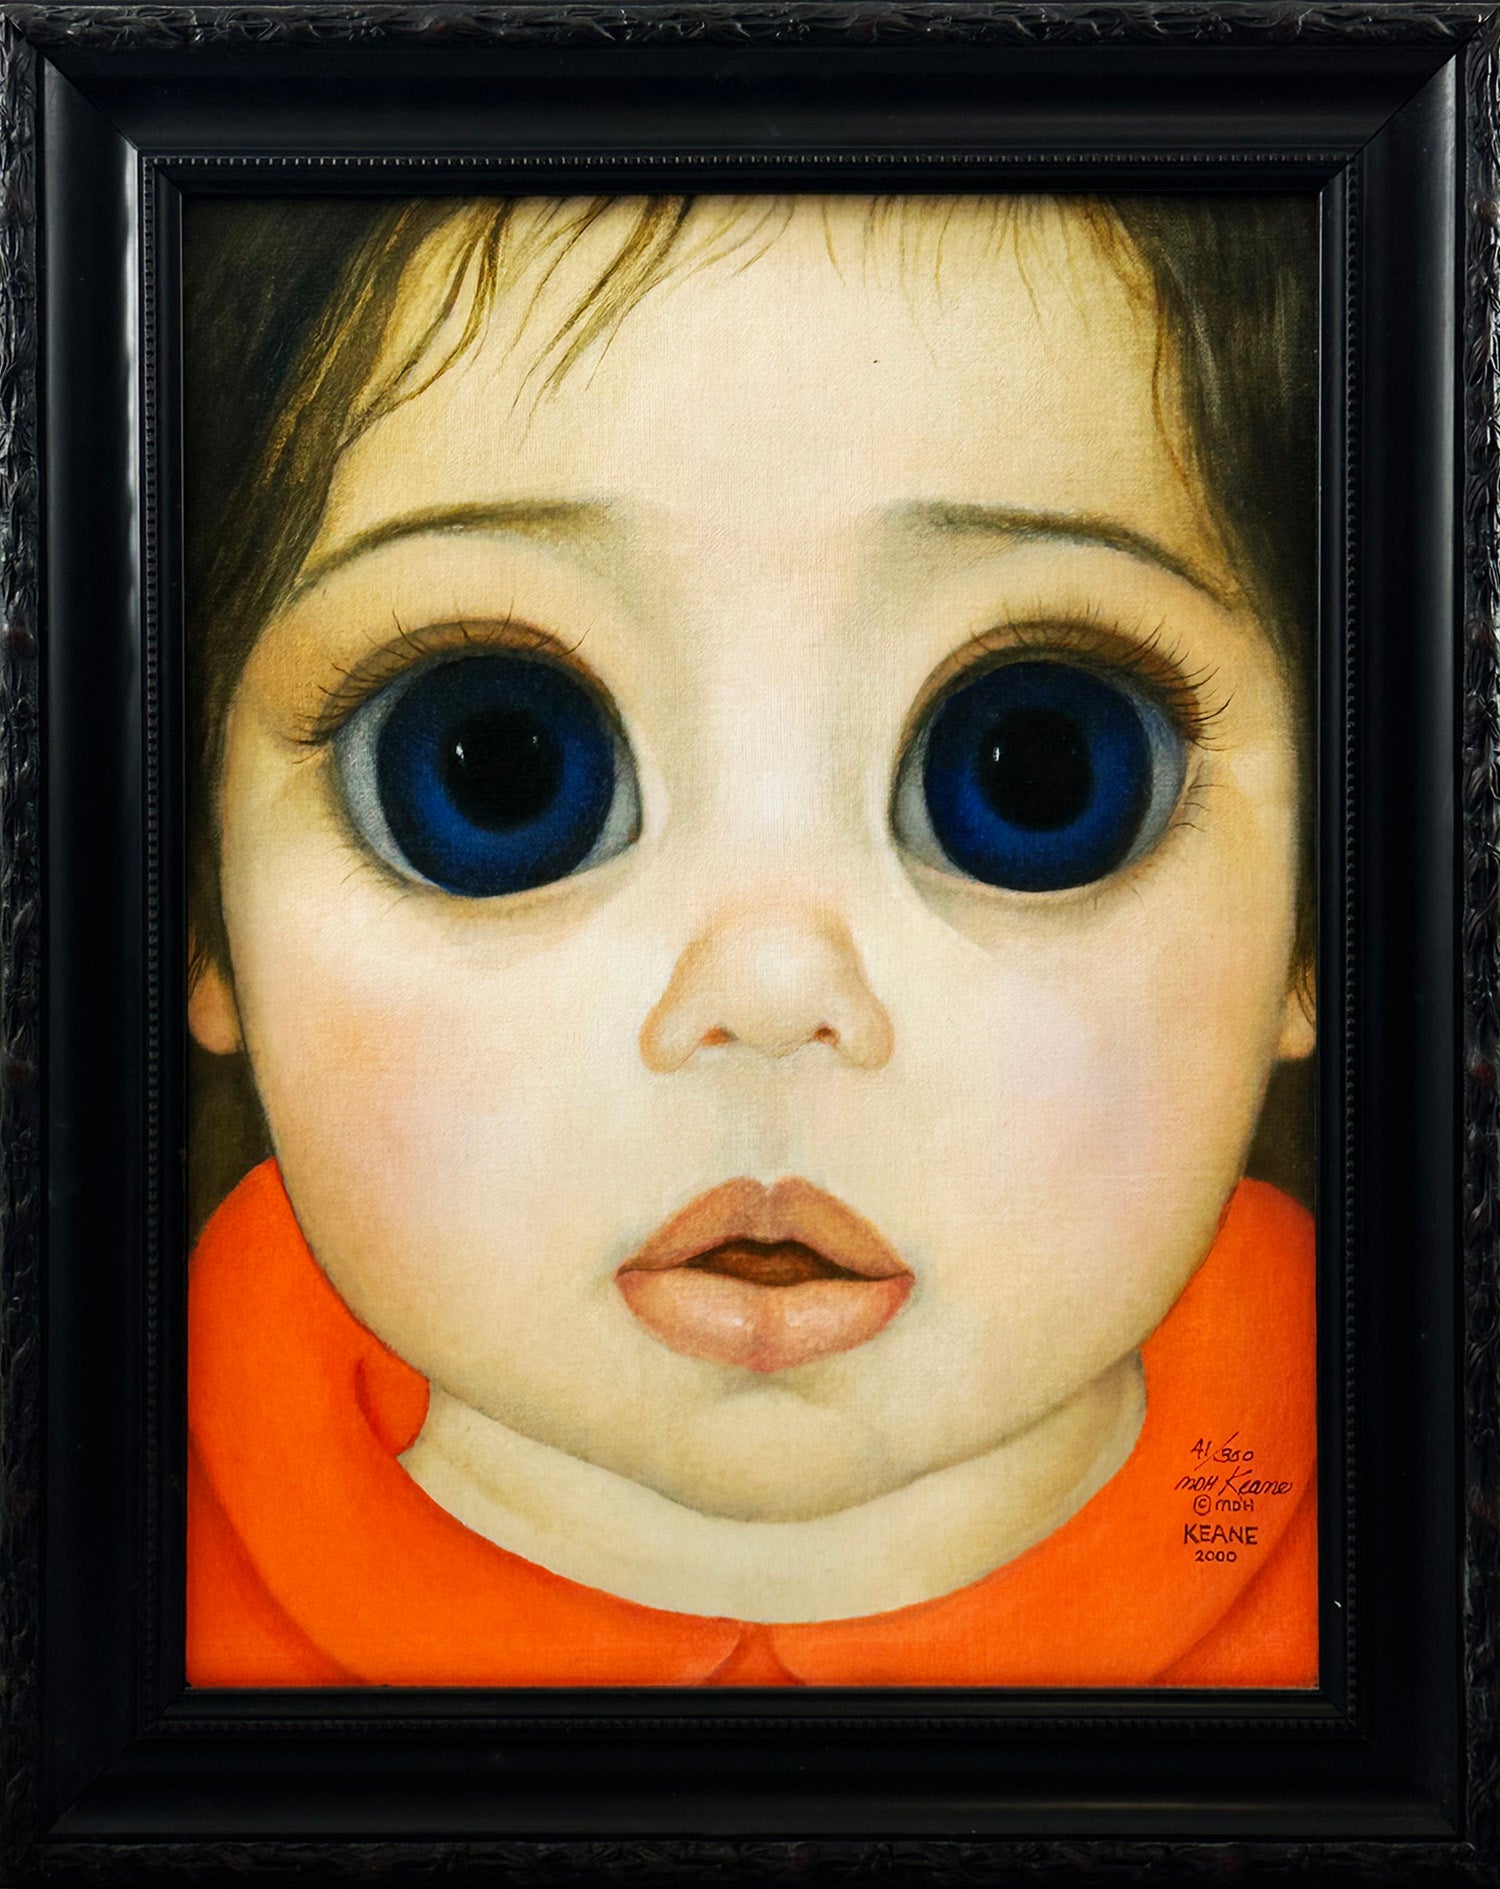 Big Eyes' the latest in Tim Burton's gallery of pop-art portraits